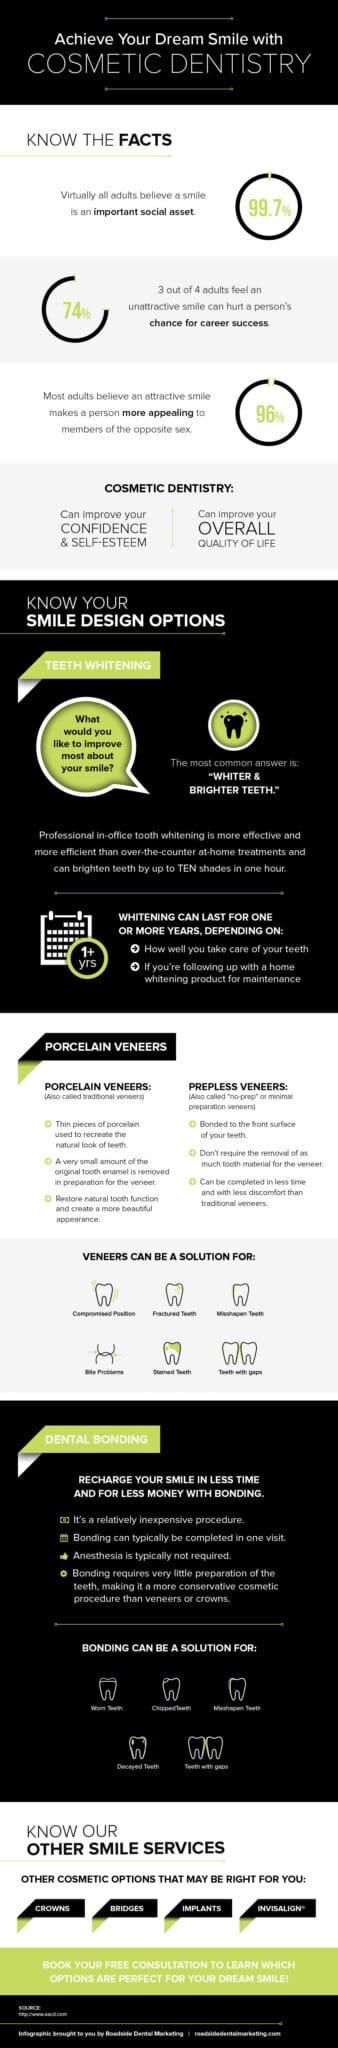 Smile Design Infographic: that covers dental bonding and porcelain veneer options.